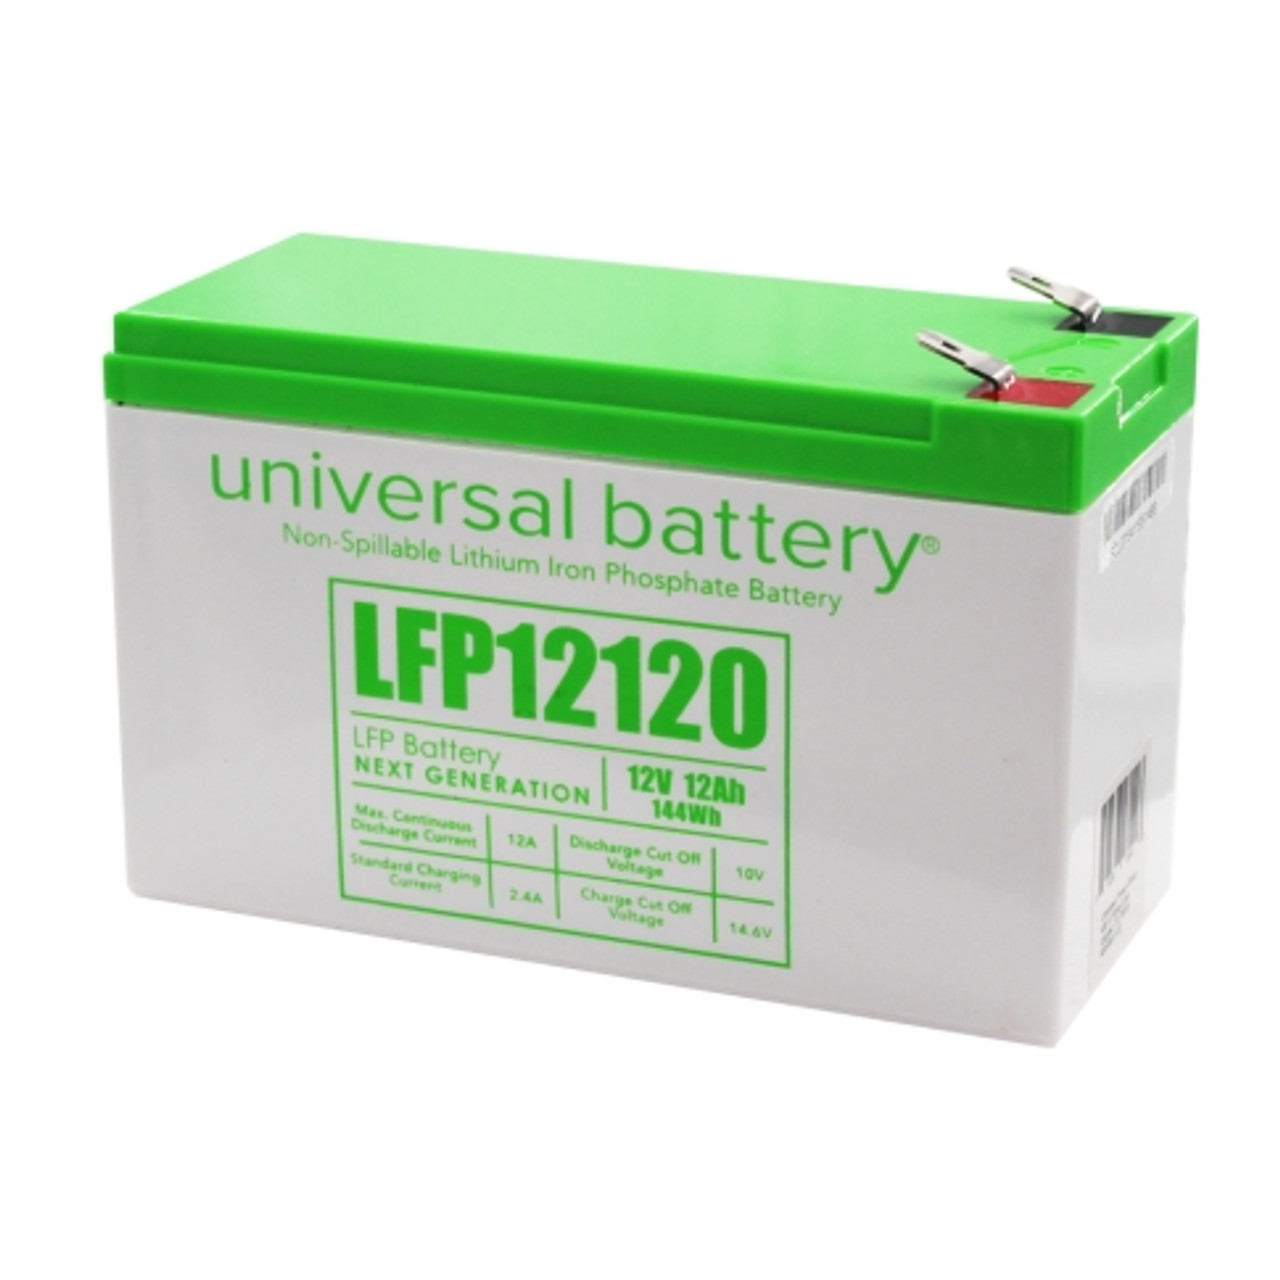 LFP12120 Lithium LifePo4 Universal Battery